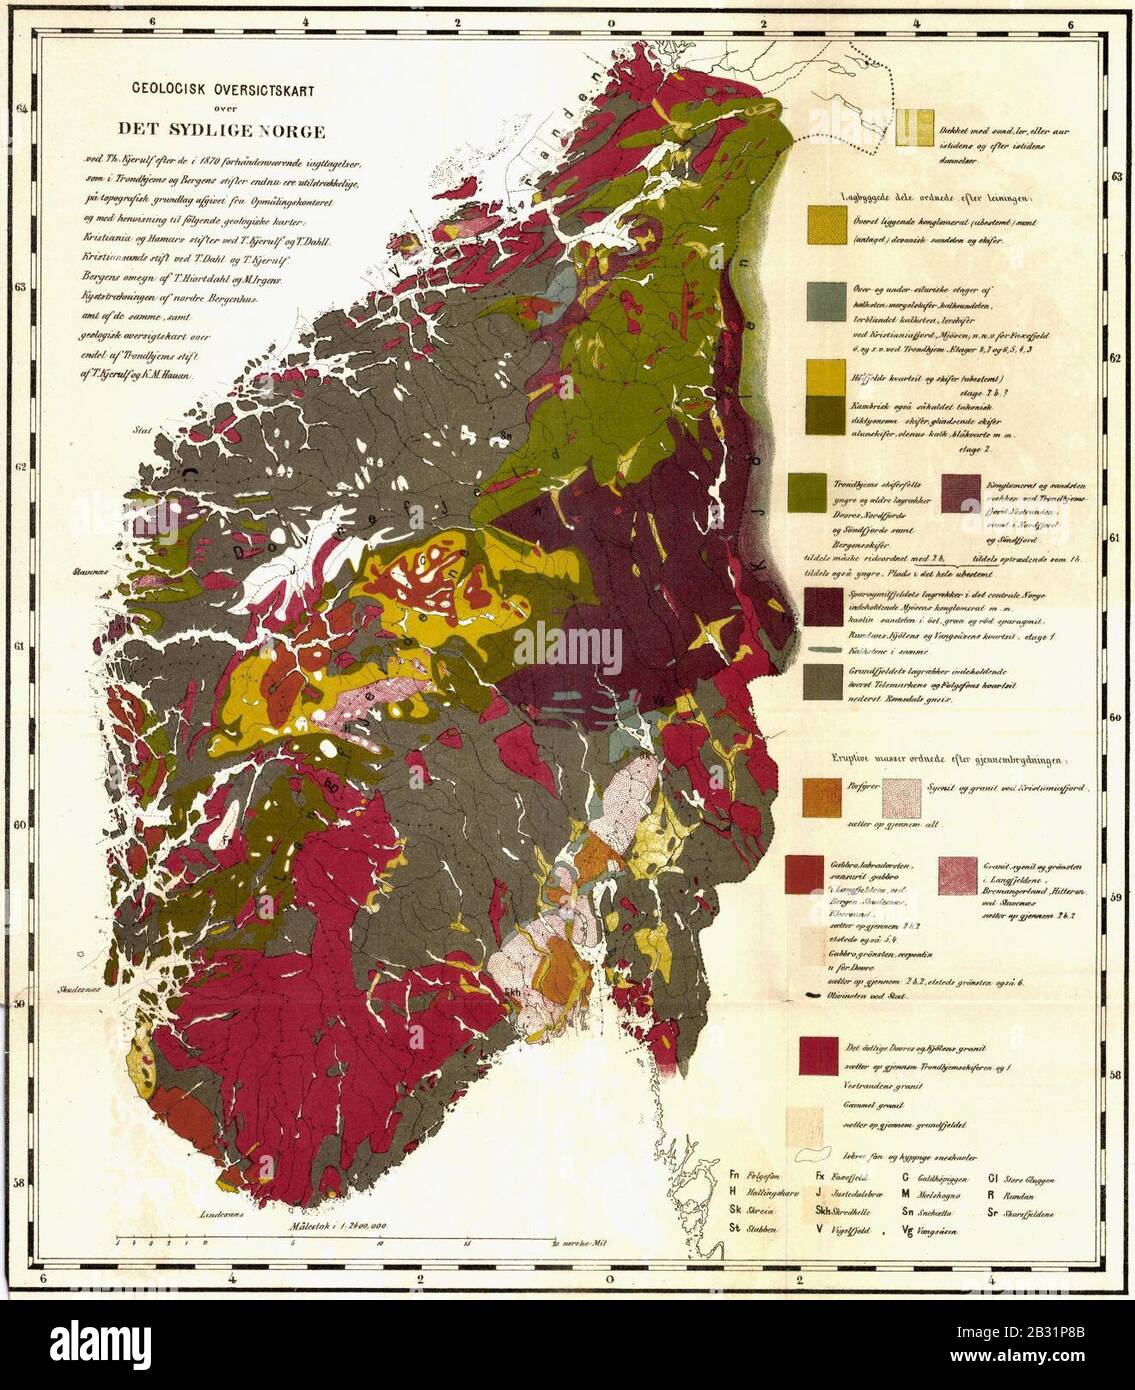 Geologisk Oversigtskart sobre det sydlige Norge (Kjerulf-Hauan). Foto de stock